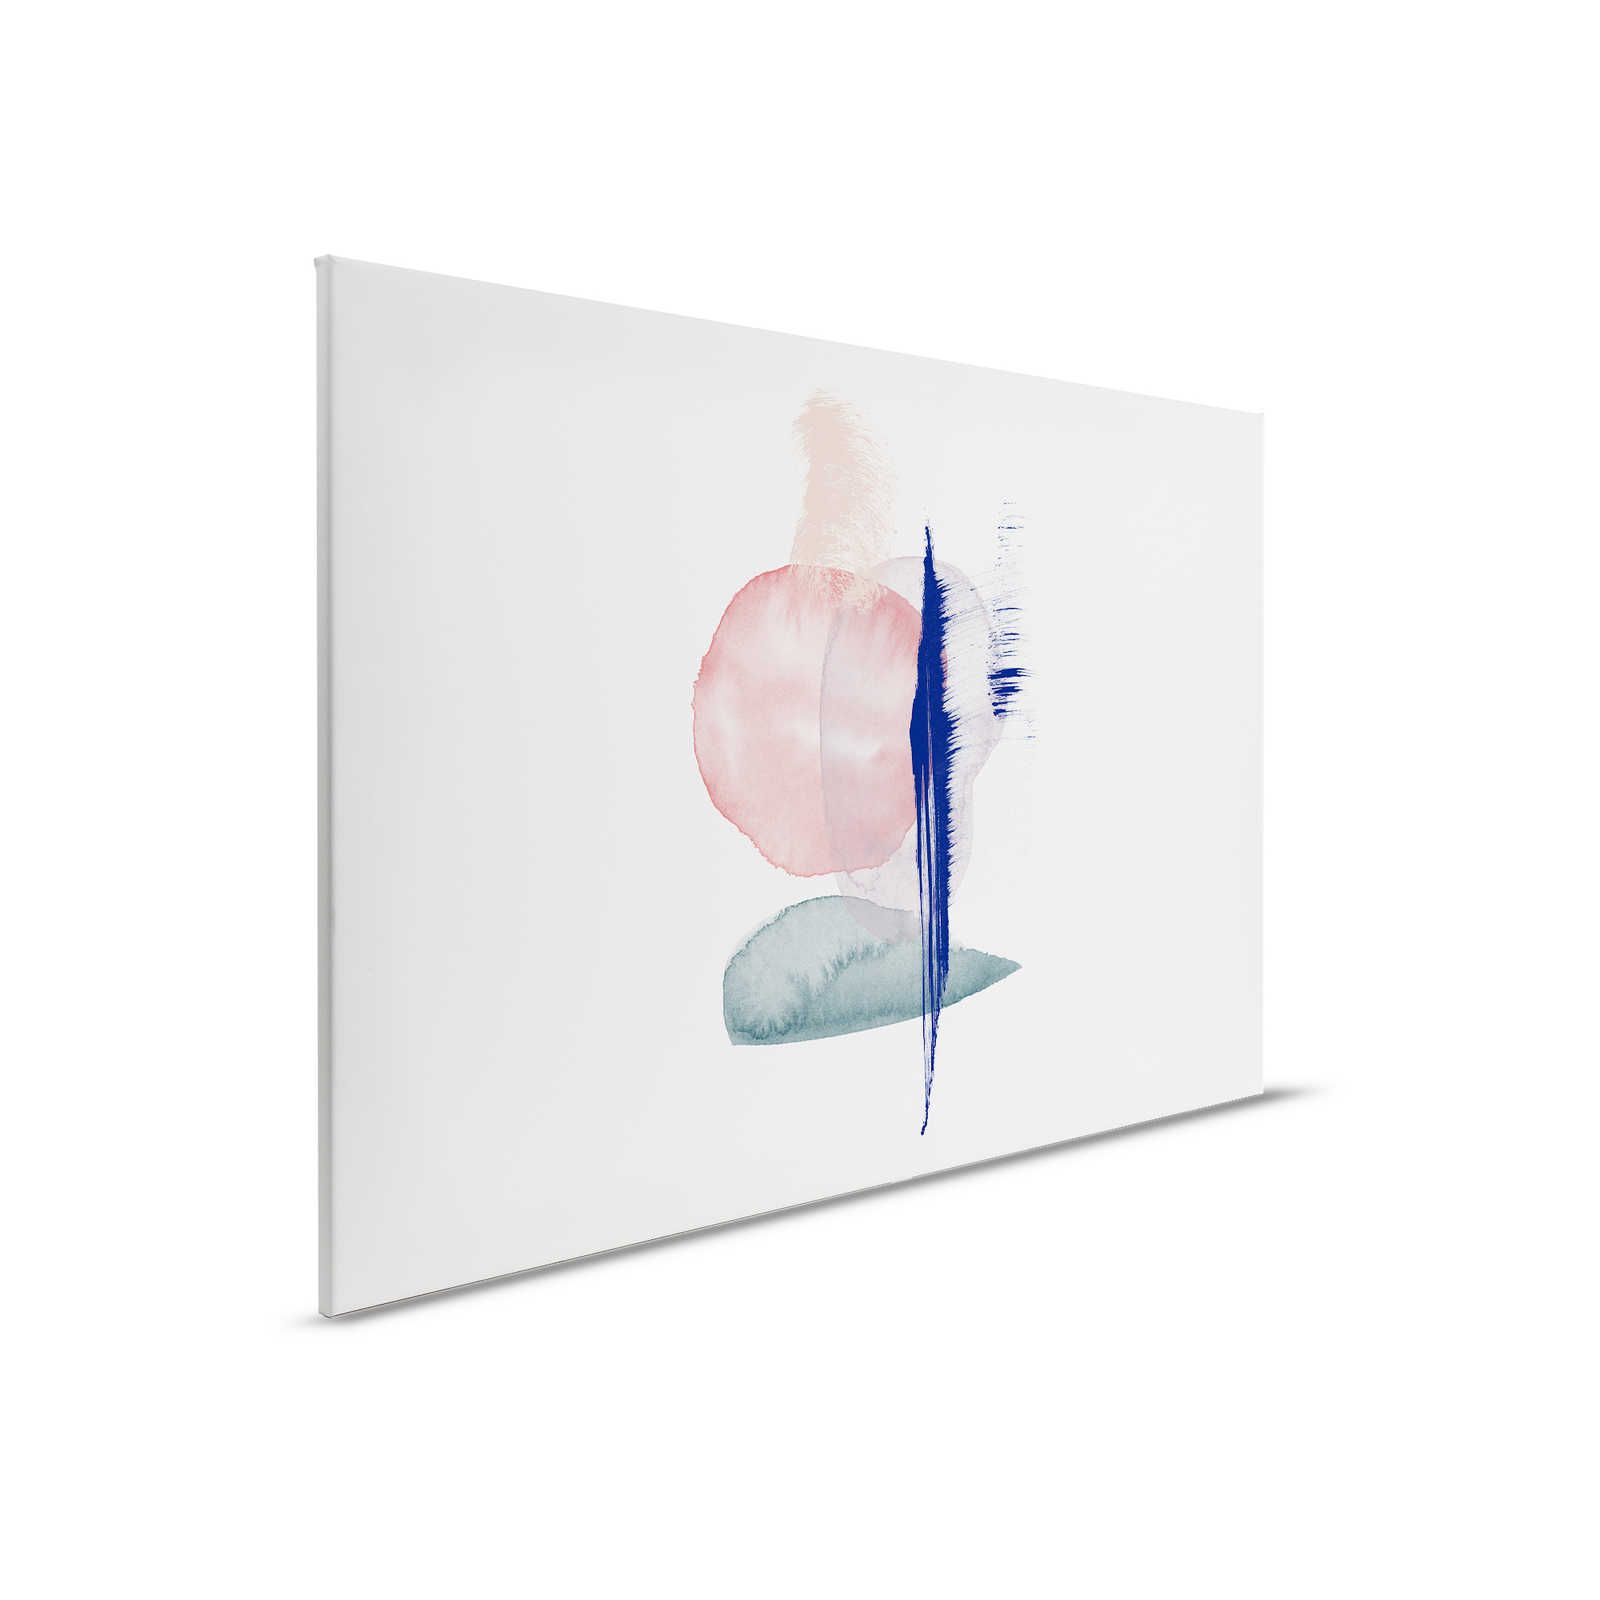         Leinwandbild Kunst Aquarell minimalistisches Design – 0,90 m x 0,60 m
    